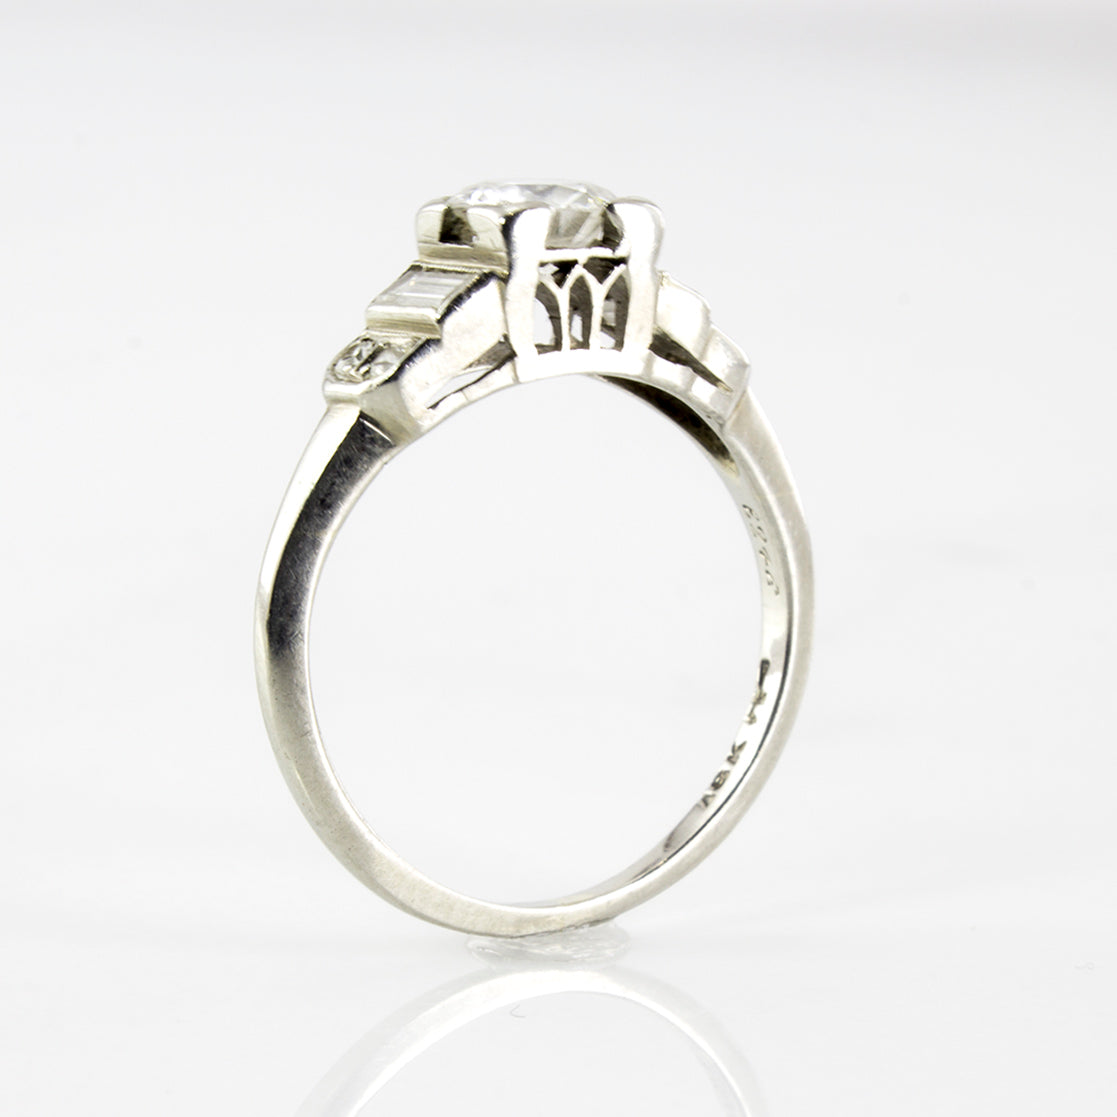 Late Art Deco Era Diamond Engagement Ring | 0.64 ctw | SZ 5.5 |